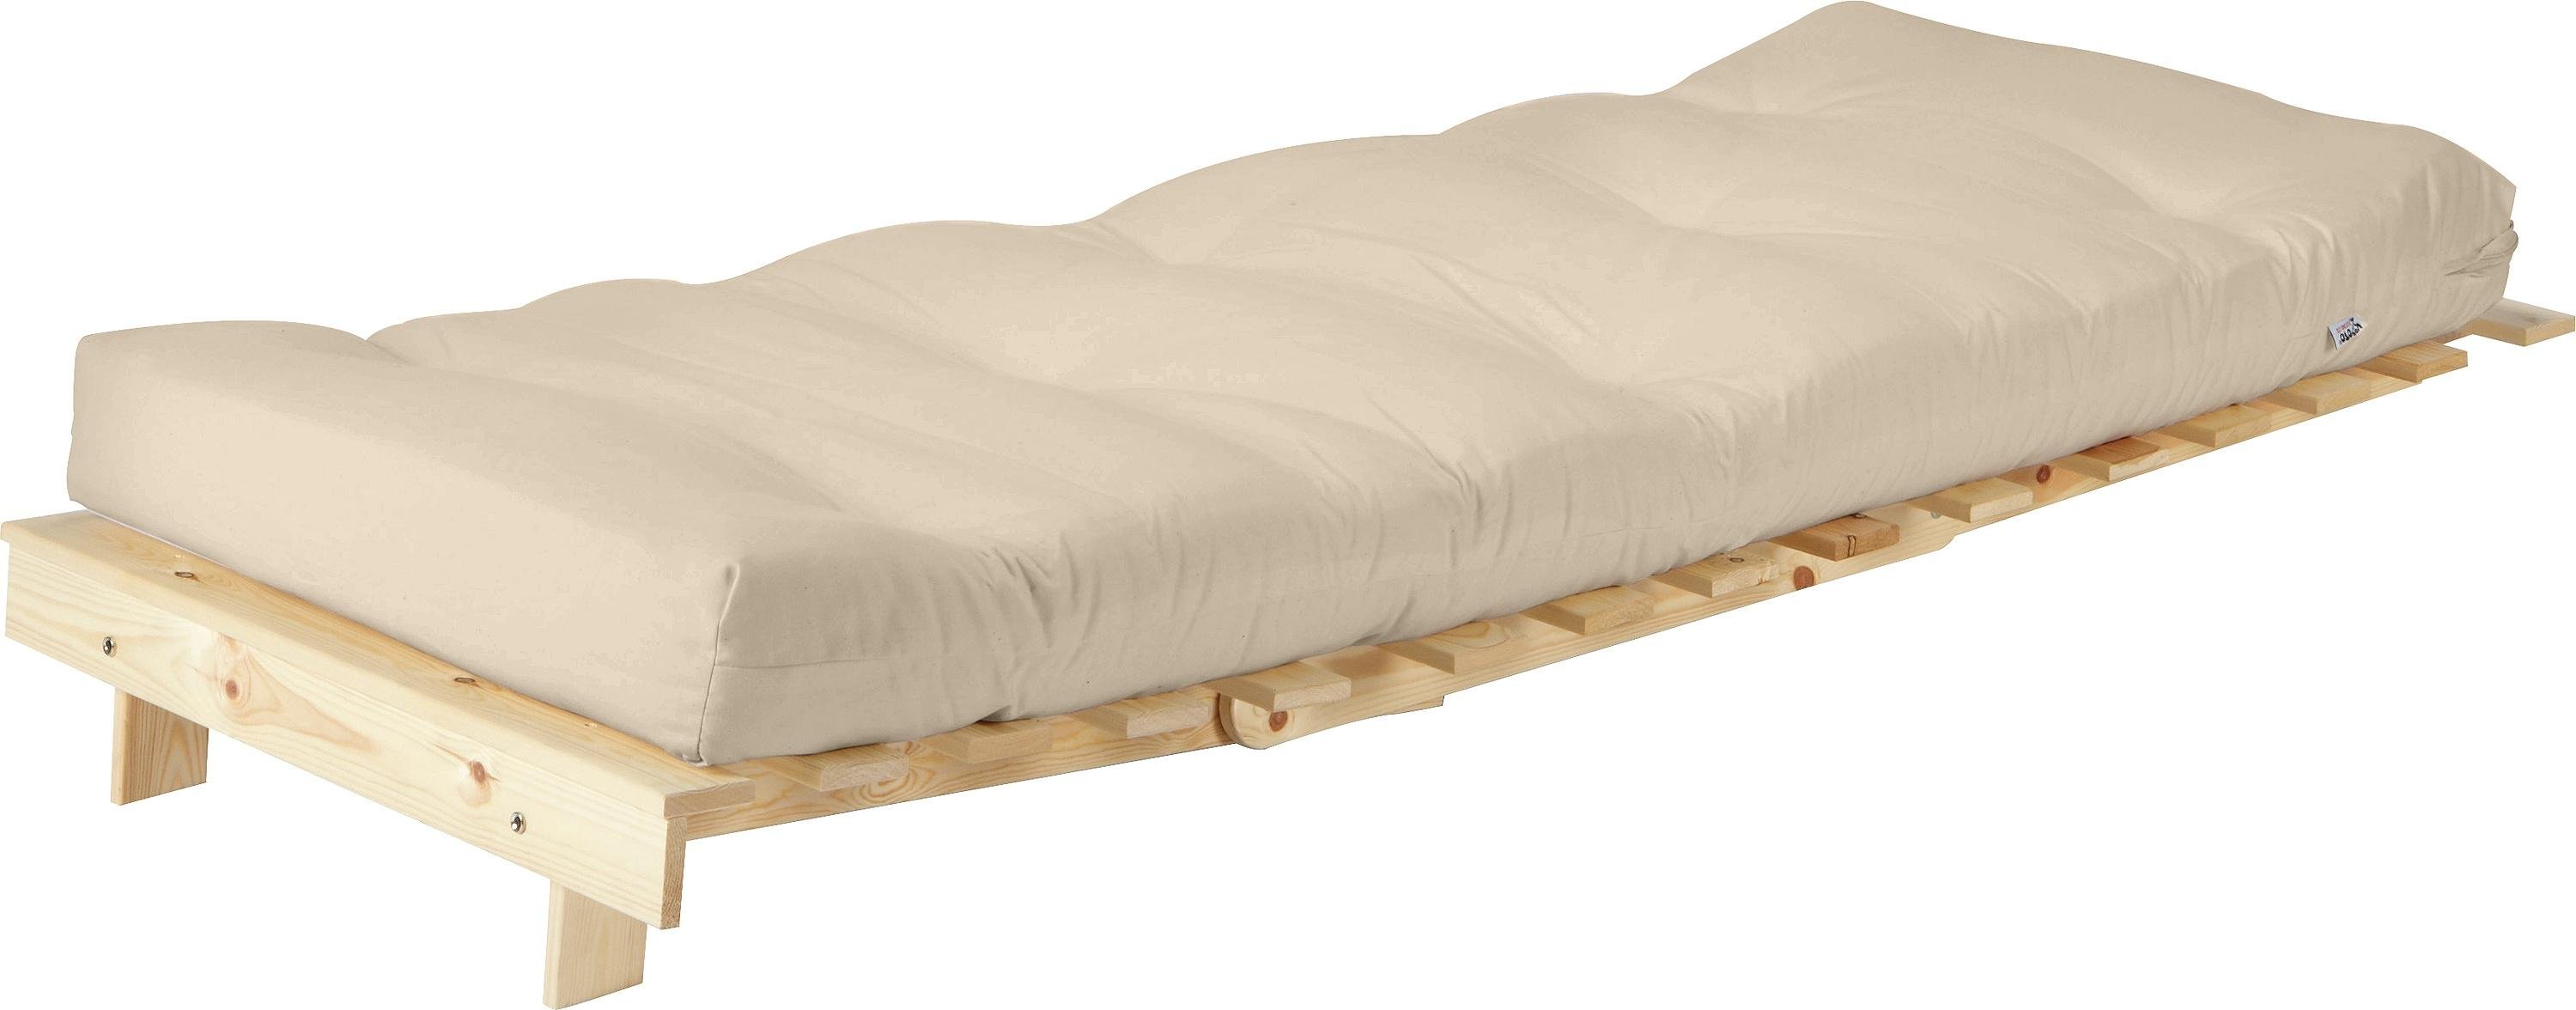 single pine futon sofa bed with mattress